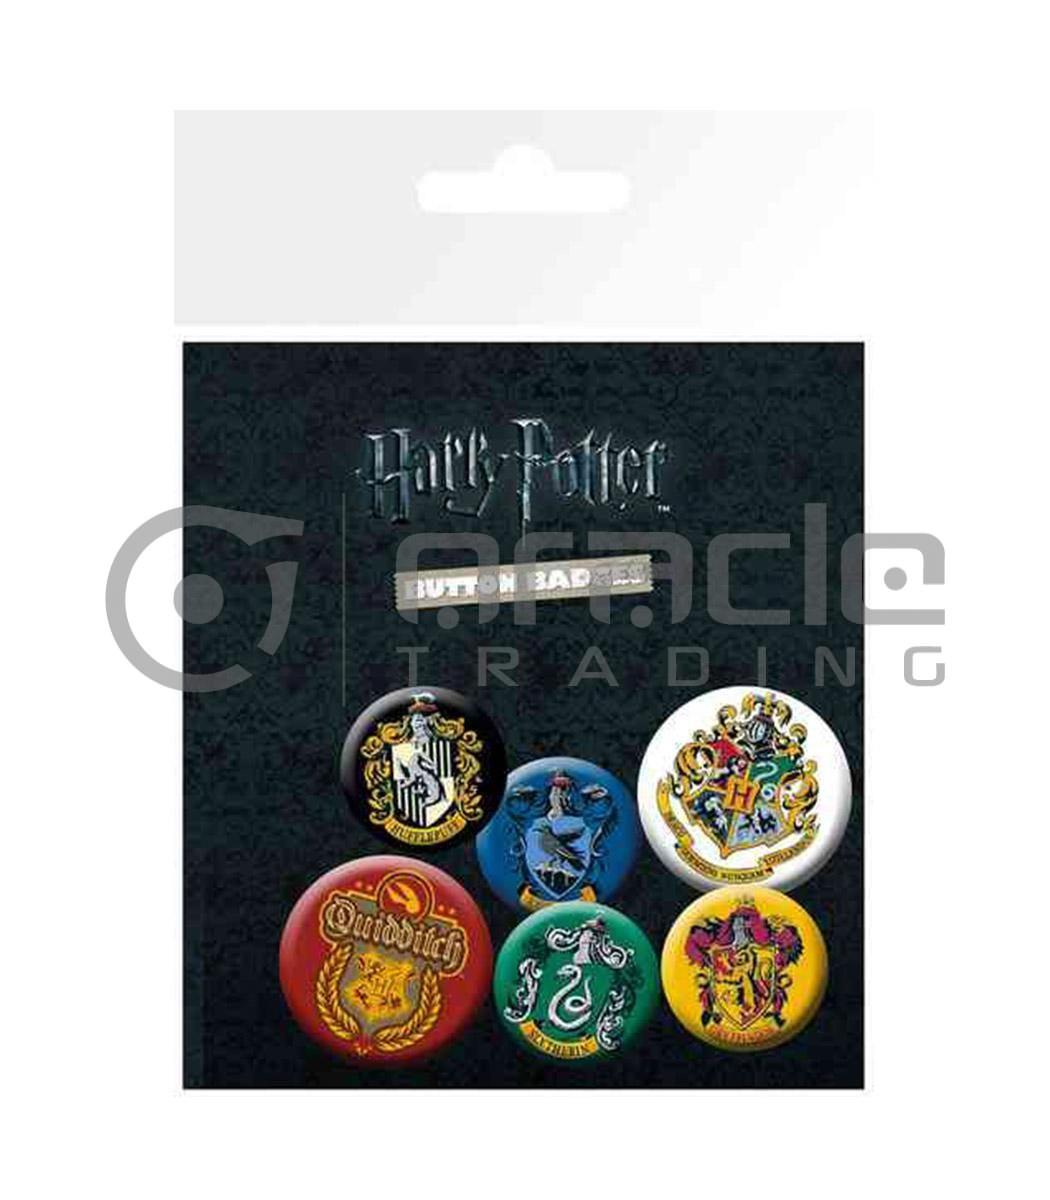 Harry Potter House Crests Badge Pack